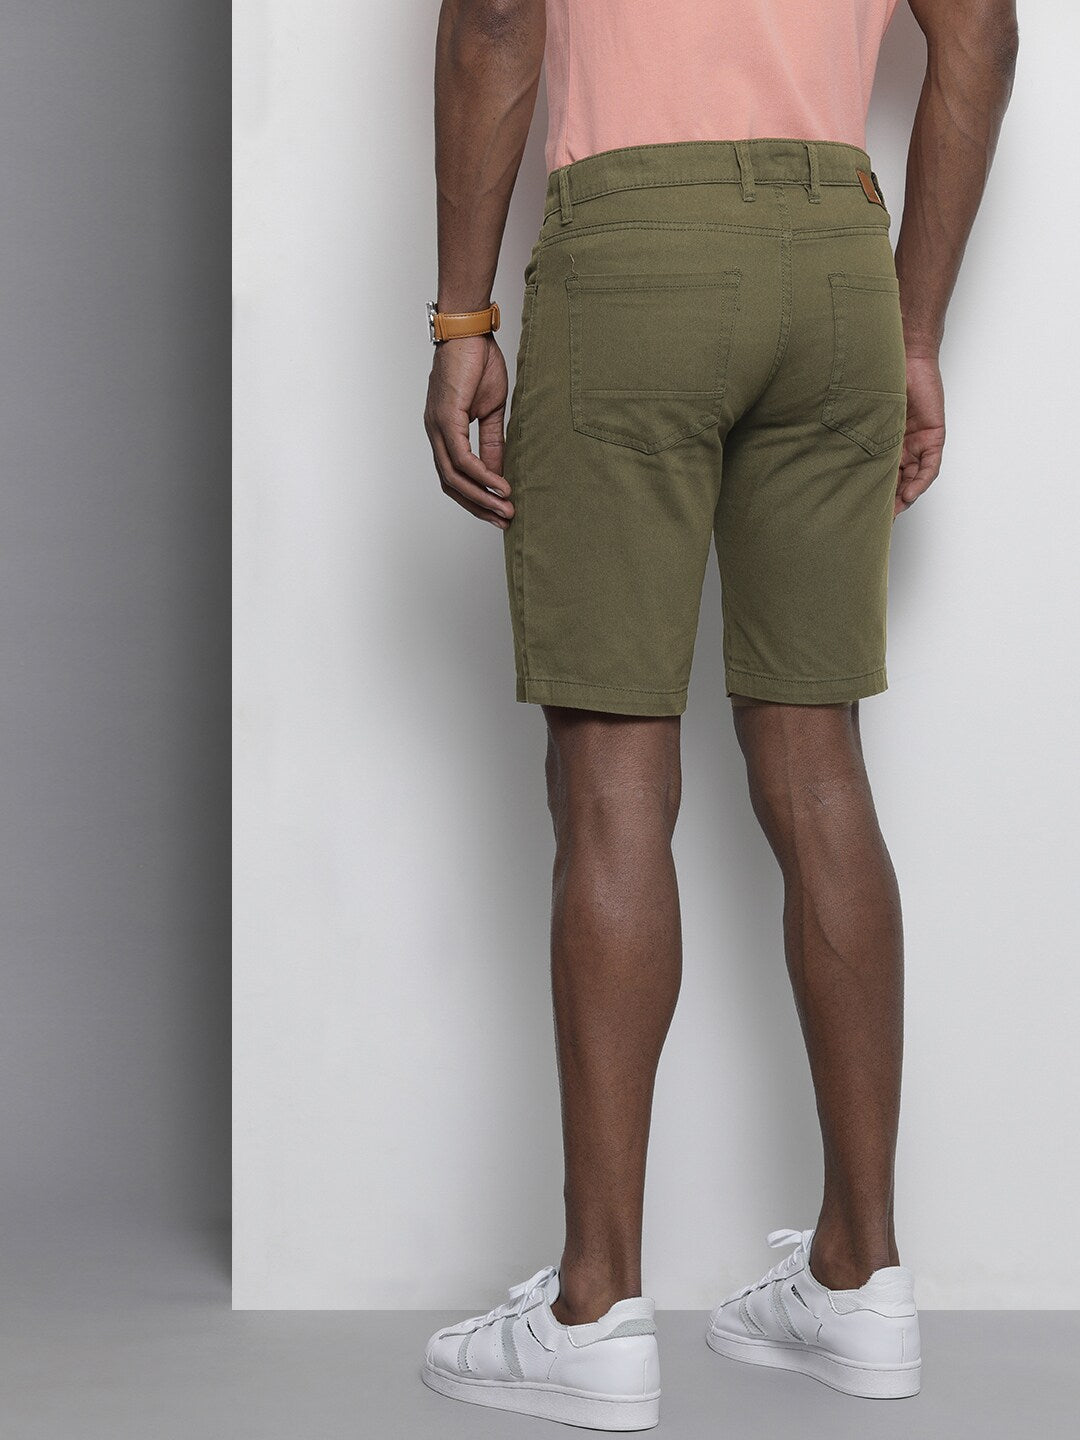 Shop Men Short Shorts Online.